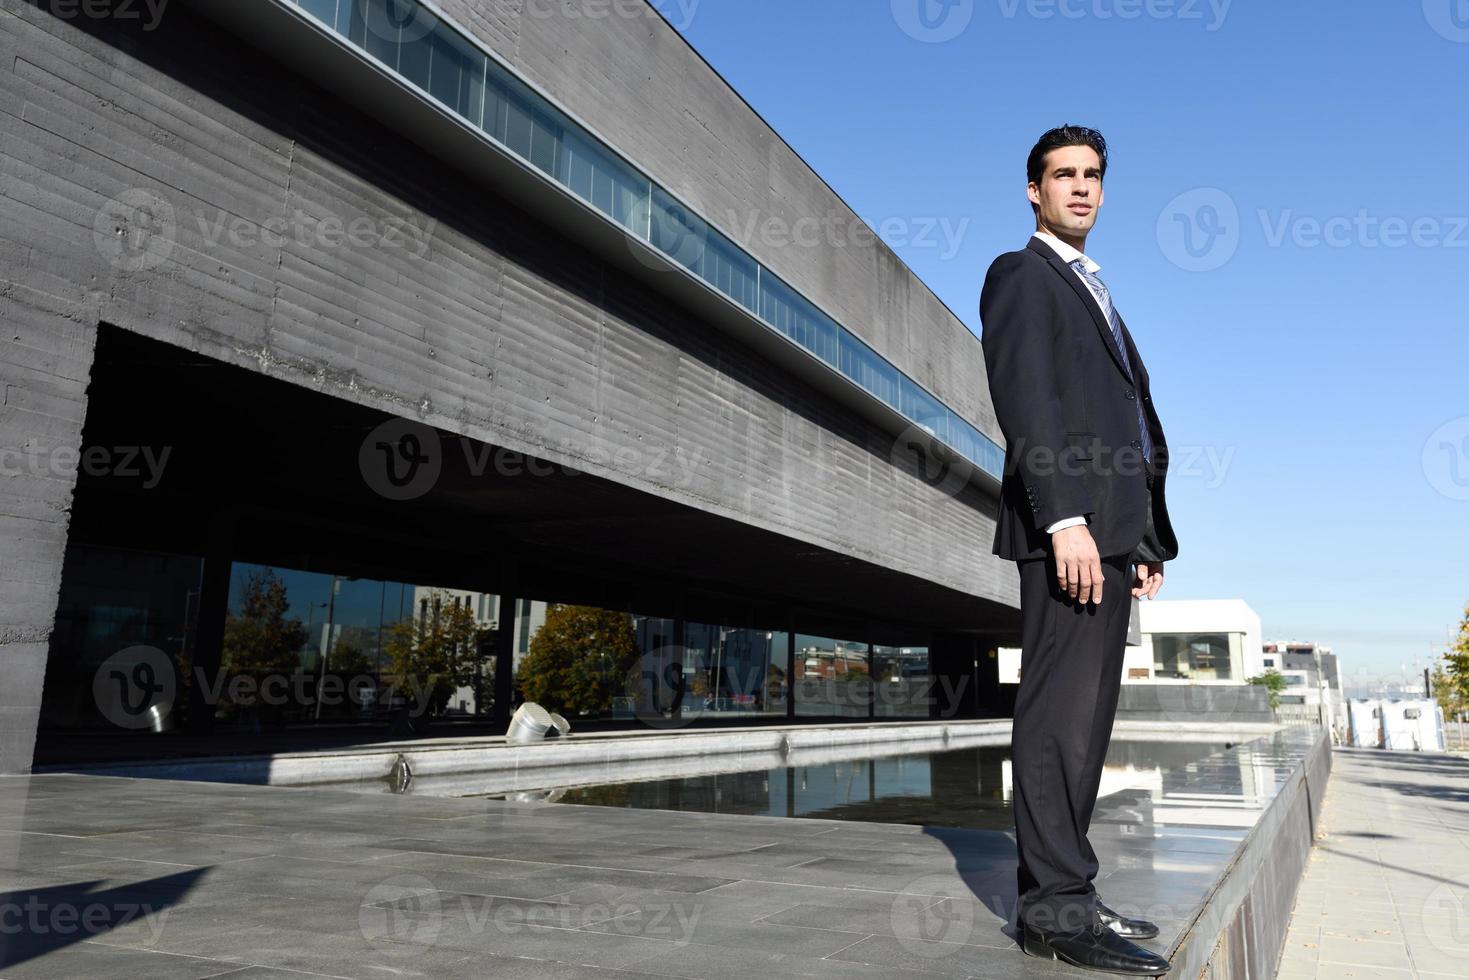 jonge zakenman die blauw pak en stropdas draagt op stedelijke achtergrond foto